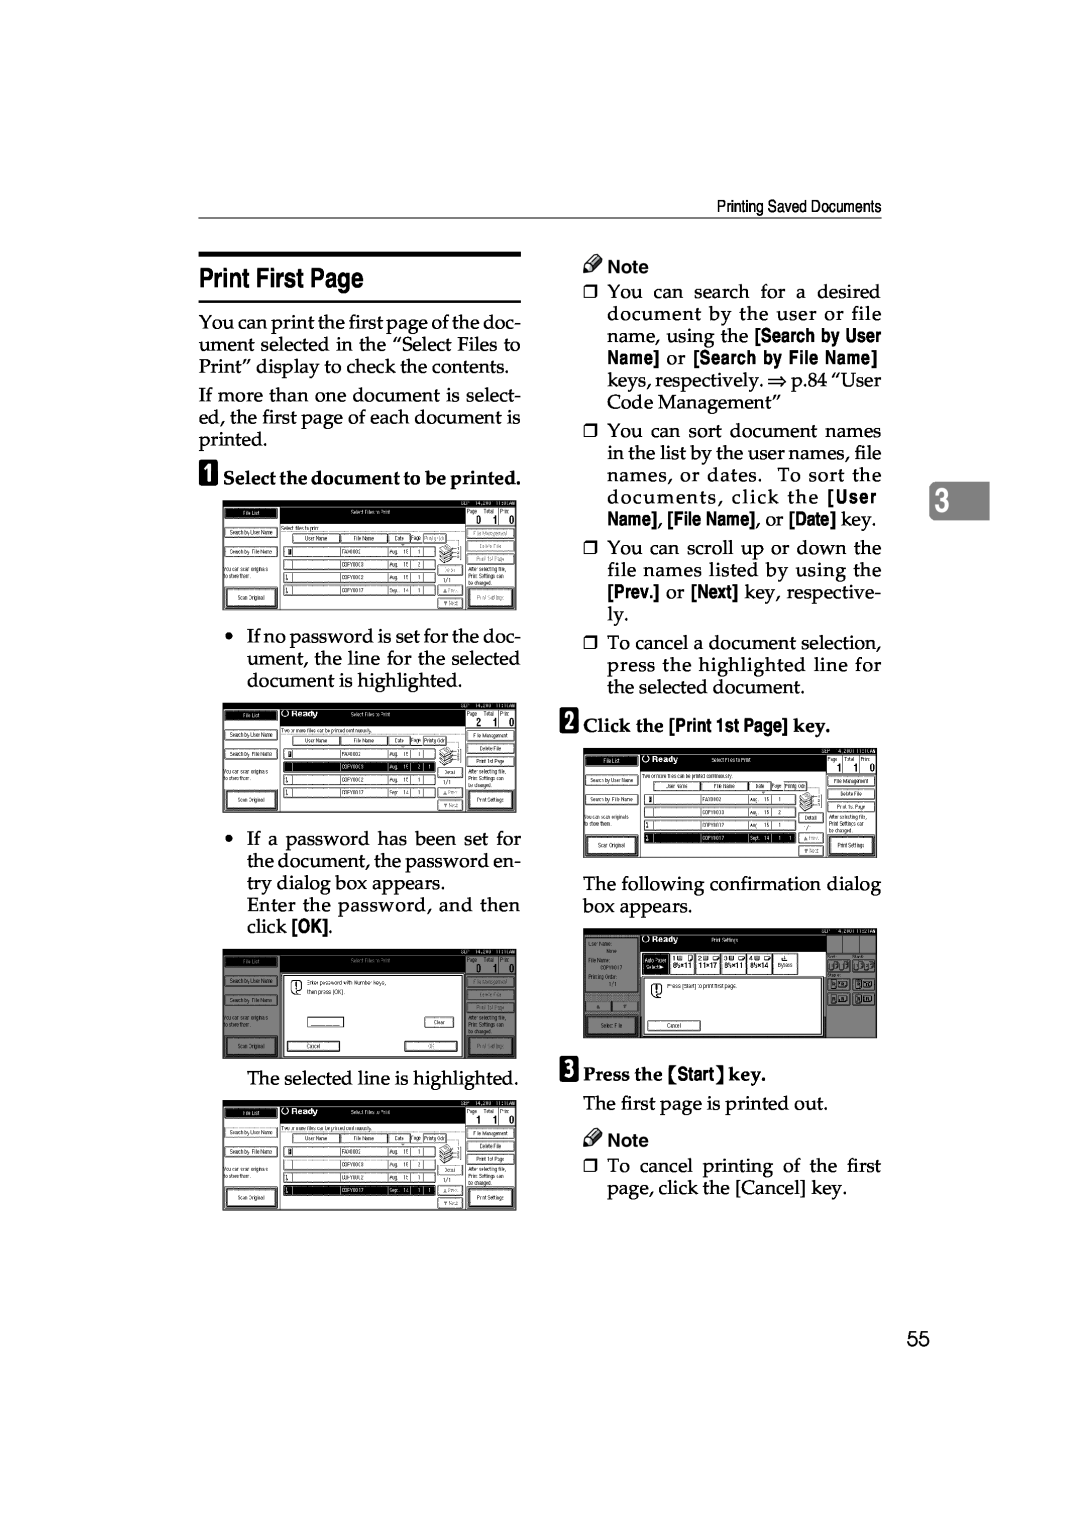 Lanier 5622 AG, 5627 AG manual Print First Page, B Click the Print 1st Page key, C Press the Start key 